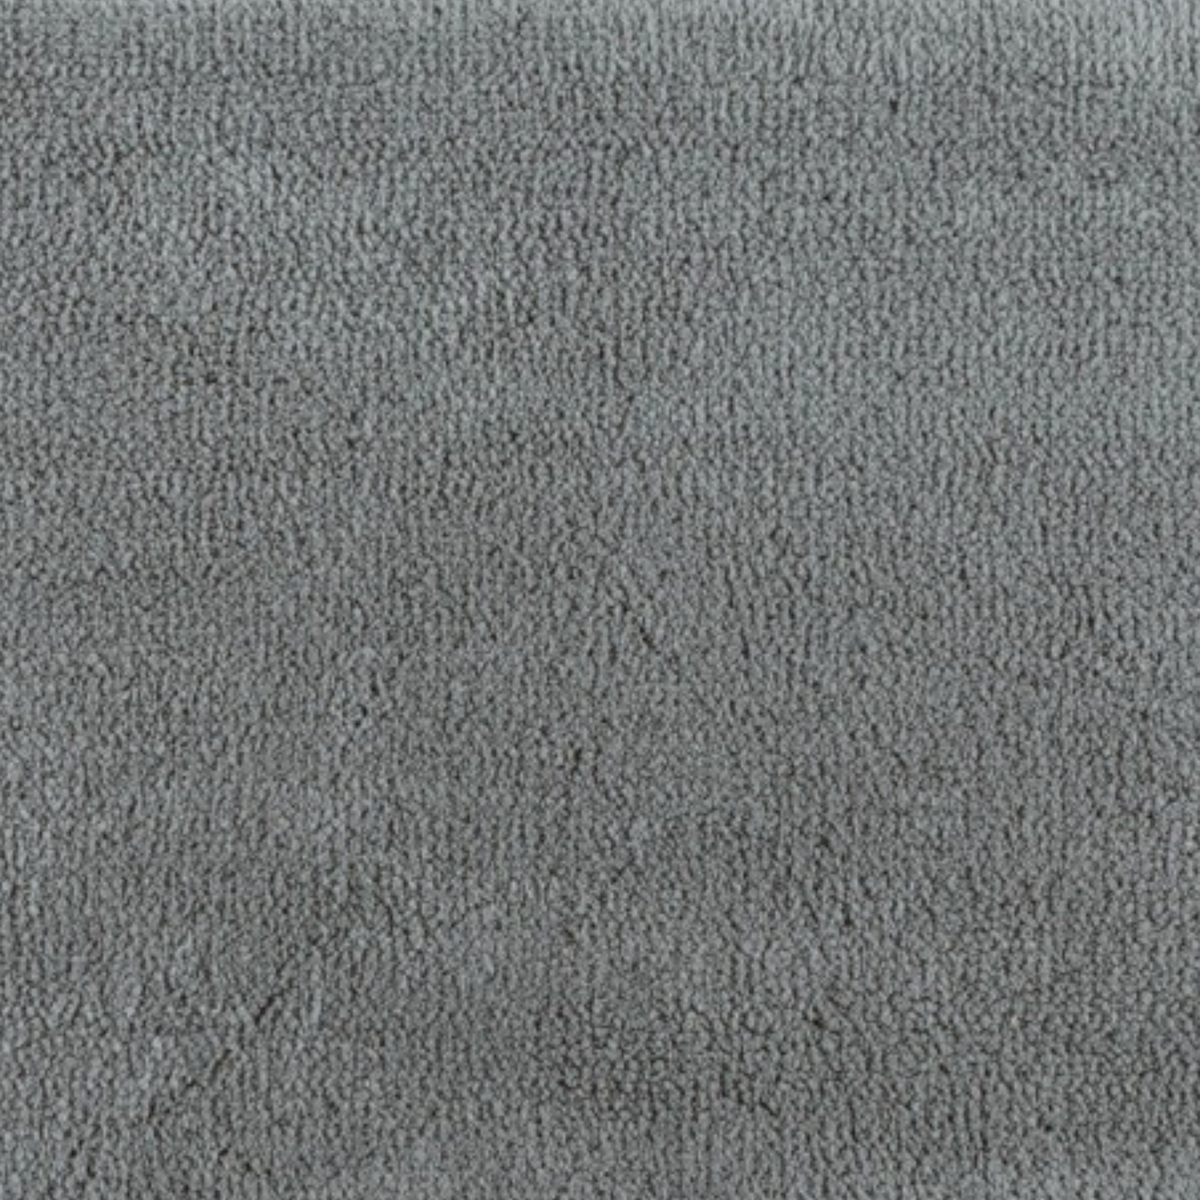 Fabric Closeup of Graccioza Cool Bath Rugs Steel Color